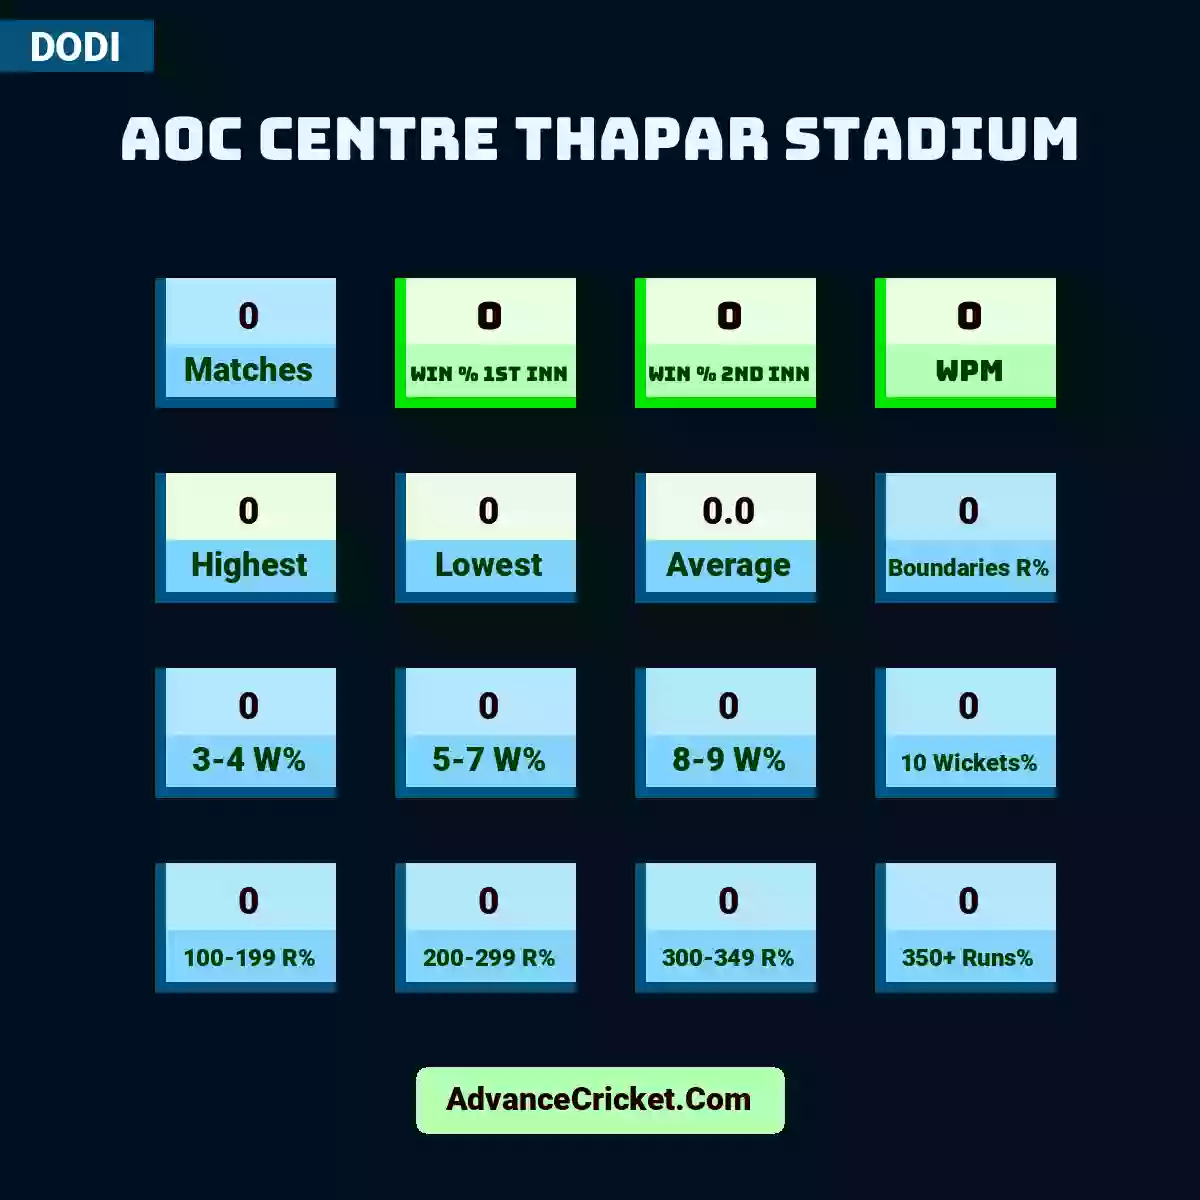 Image showing AOC Centre Thapar Stadium with Matches: 0, Win % 1st Inn: 0, Win % 2nd Inn: 0, WPM: 0, Highest: 0, Lowest: 0, Average: 0.0, Boundaries R%: 0, 3-4 W%: 0, 5-7 W%: 0, 8-9 W%: 0, 10 Wickets%: 0, 100-199 R%: 0, 200-299 R%: 0, 300-349 R%: 0, 350+ Runs%: 0.